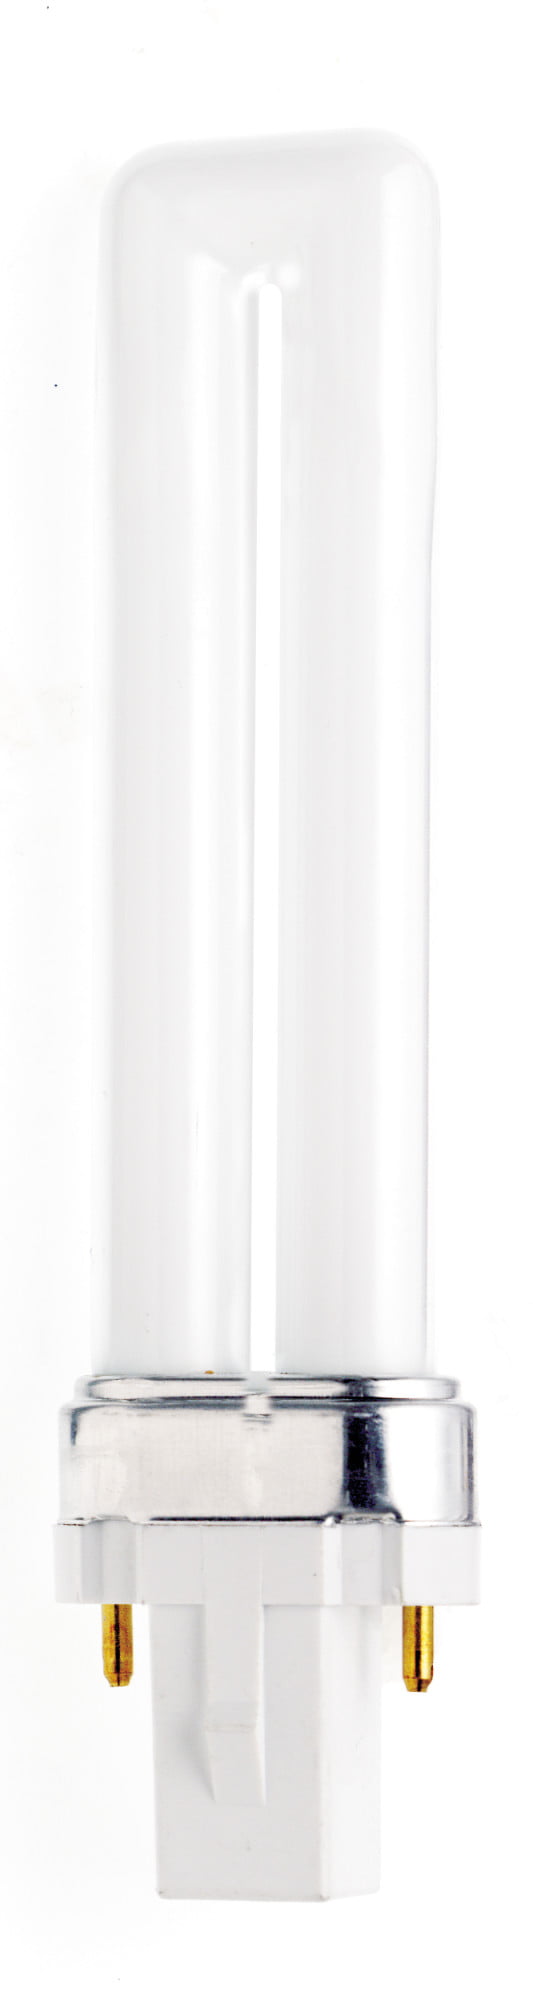 Sylvania Premium Soft White Single Tube CFL Bulb 7W G23 2 Pin 400 Lumens 2700K 